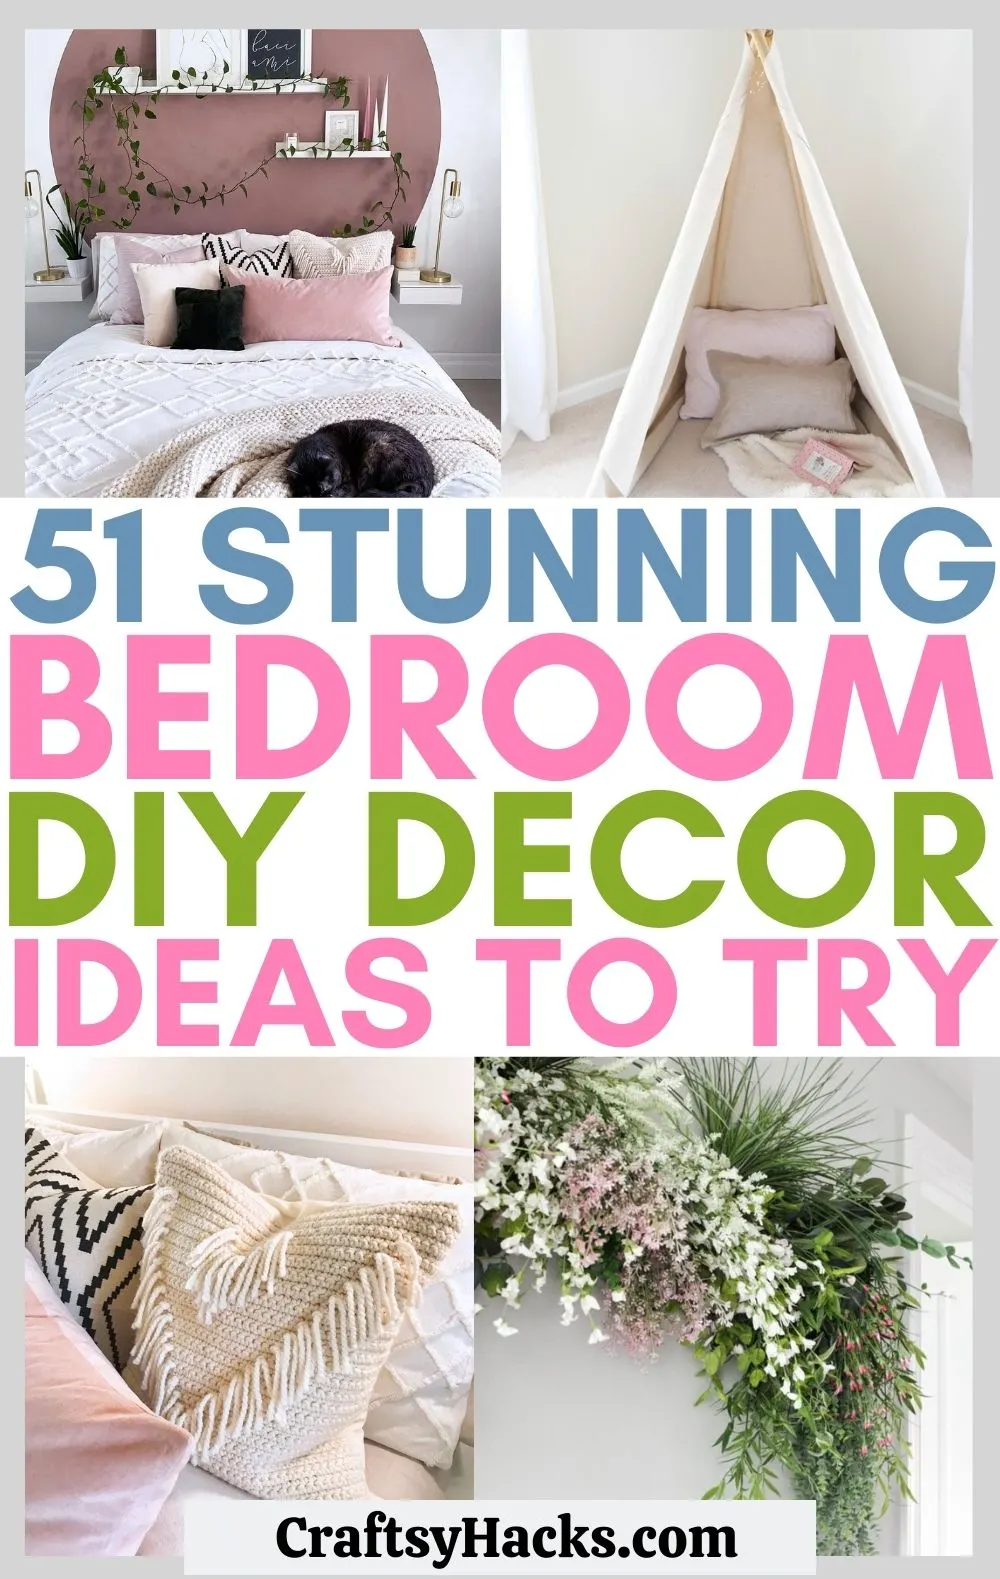 50 Fun and Easy DIY Room Decor Ideas That Won't Break The Bank